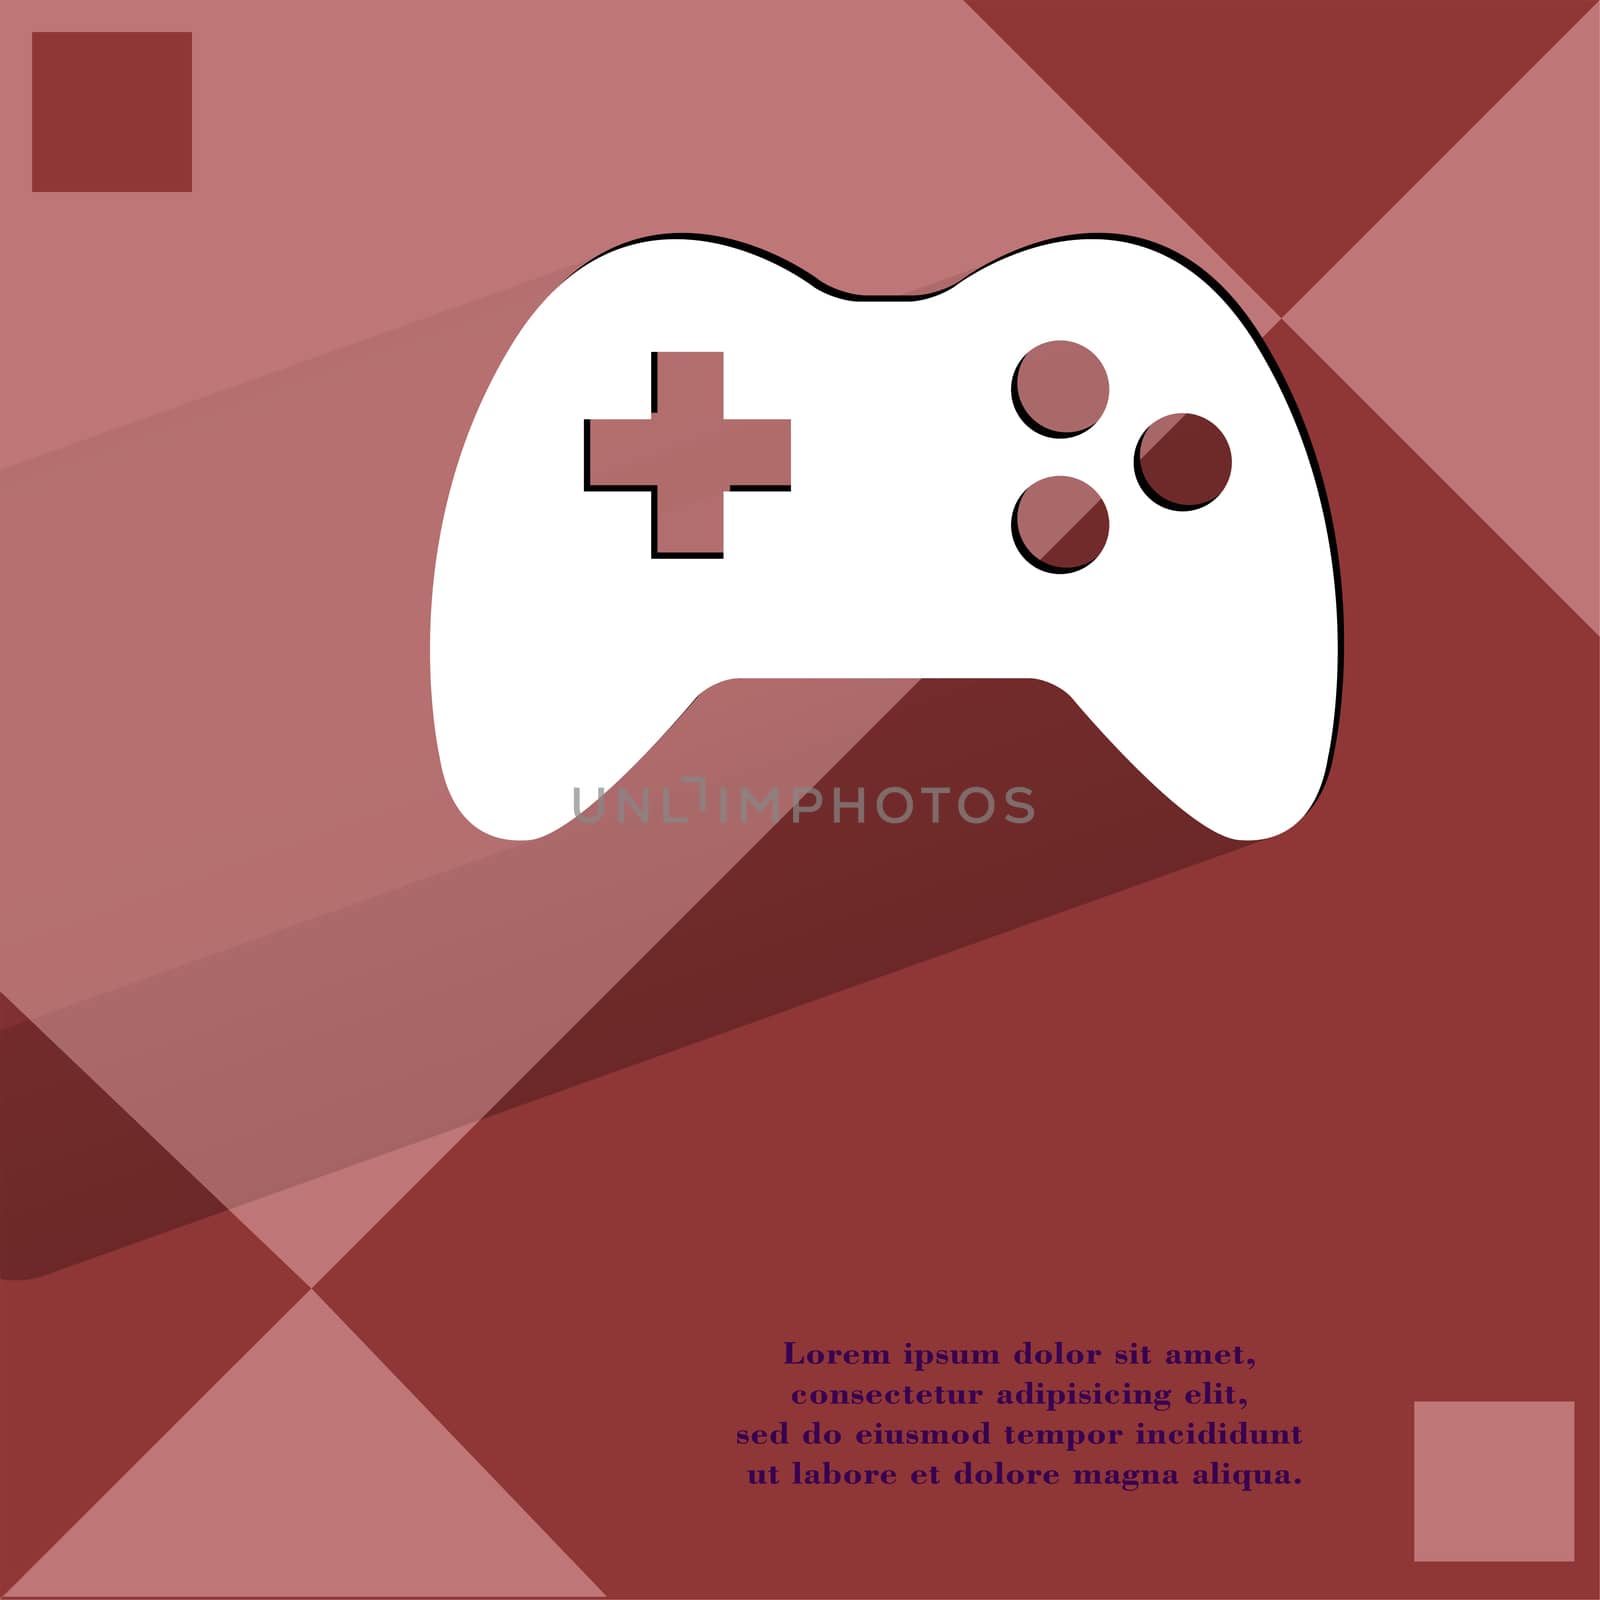 Gaming Joystick. Flat modern web design on a flat geometric abstract background . 